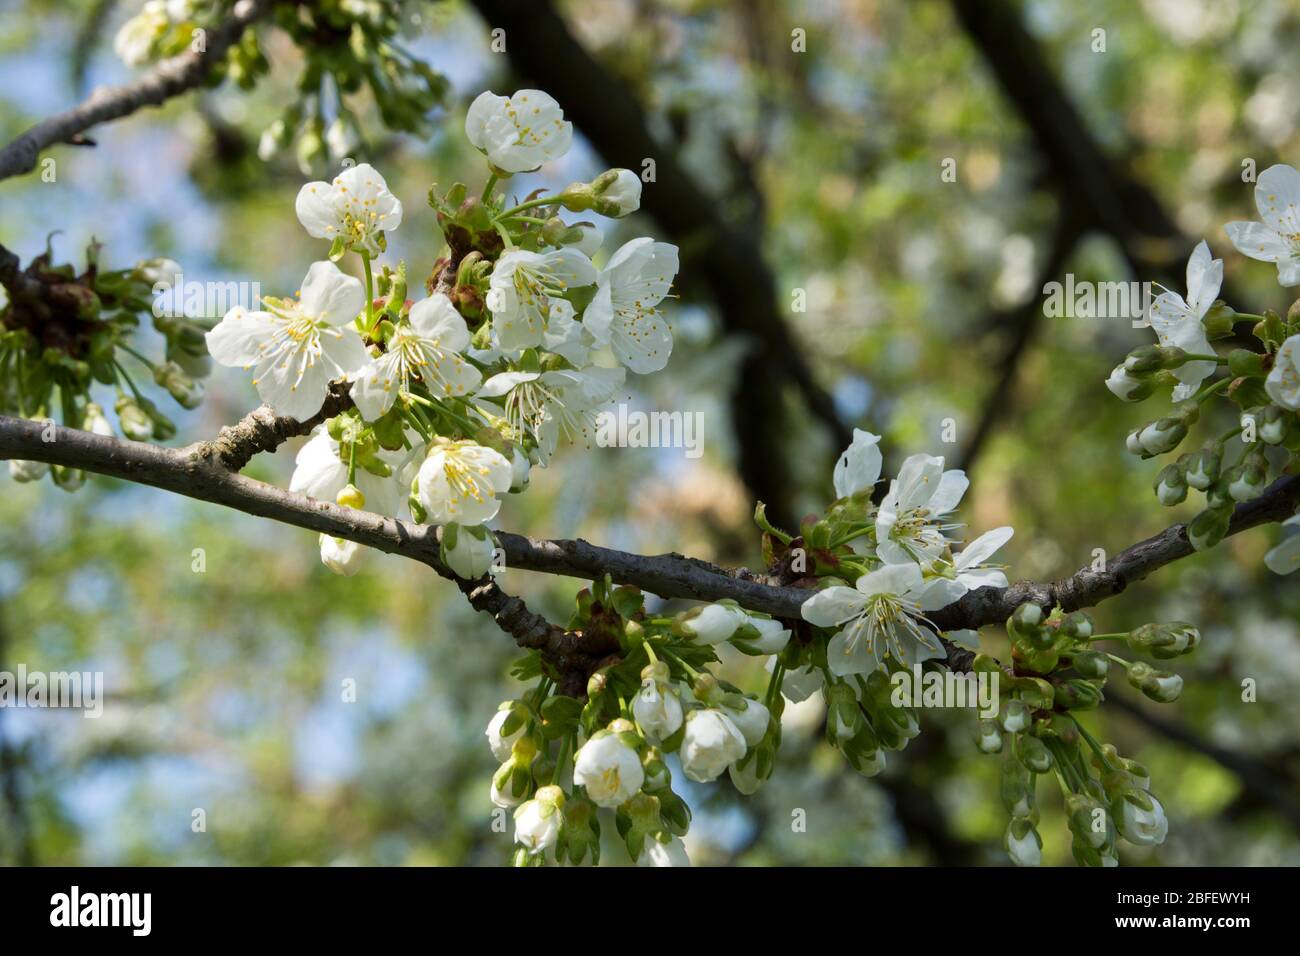 Cherry tree in full blossom Stock Photo